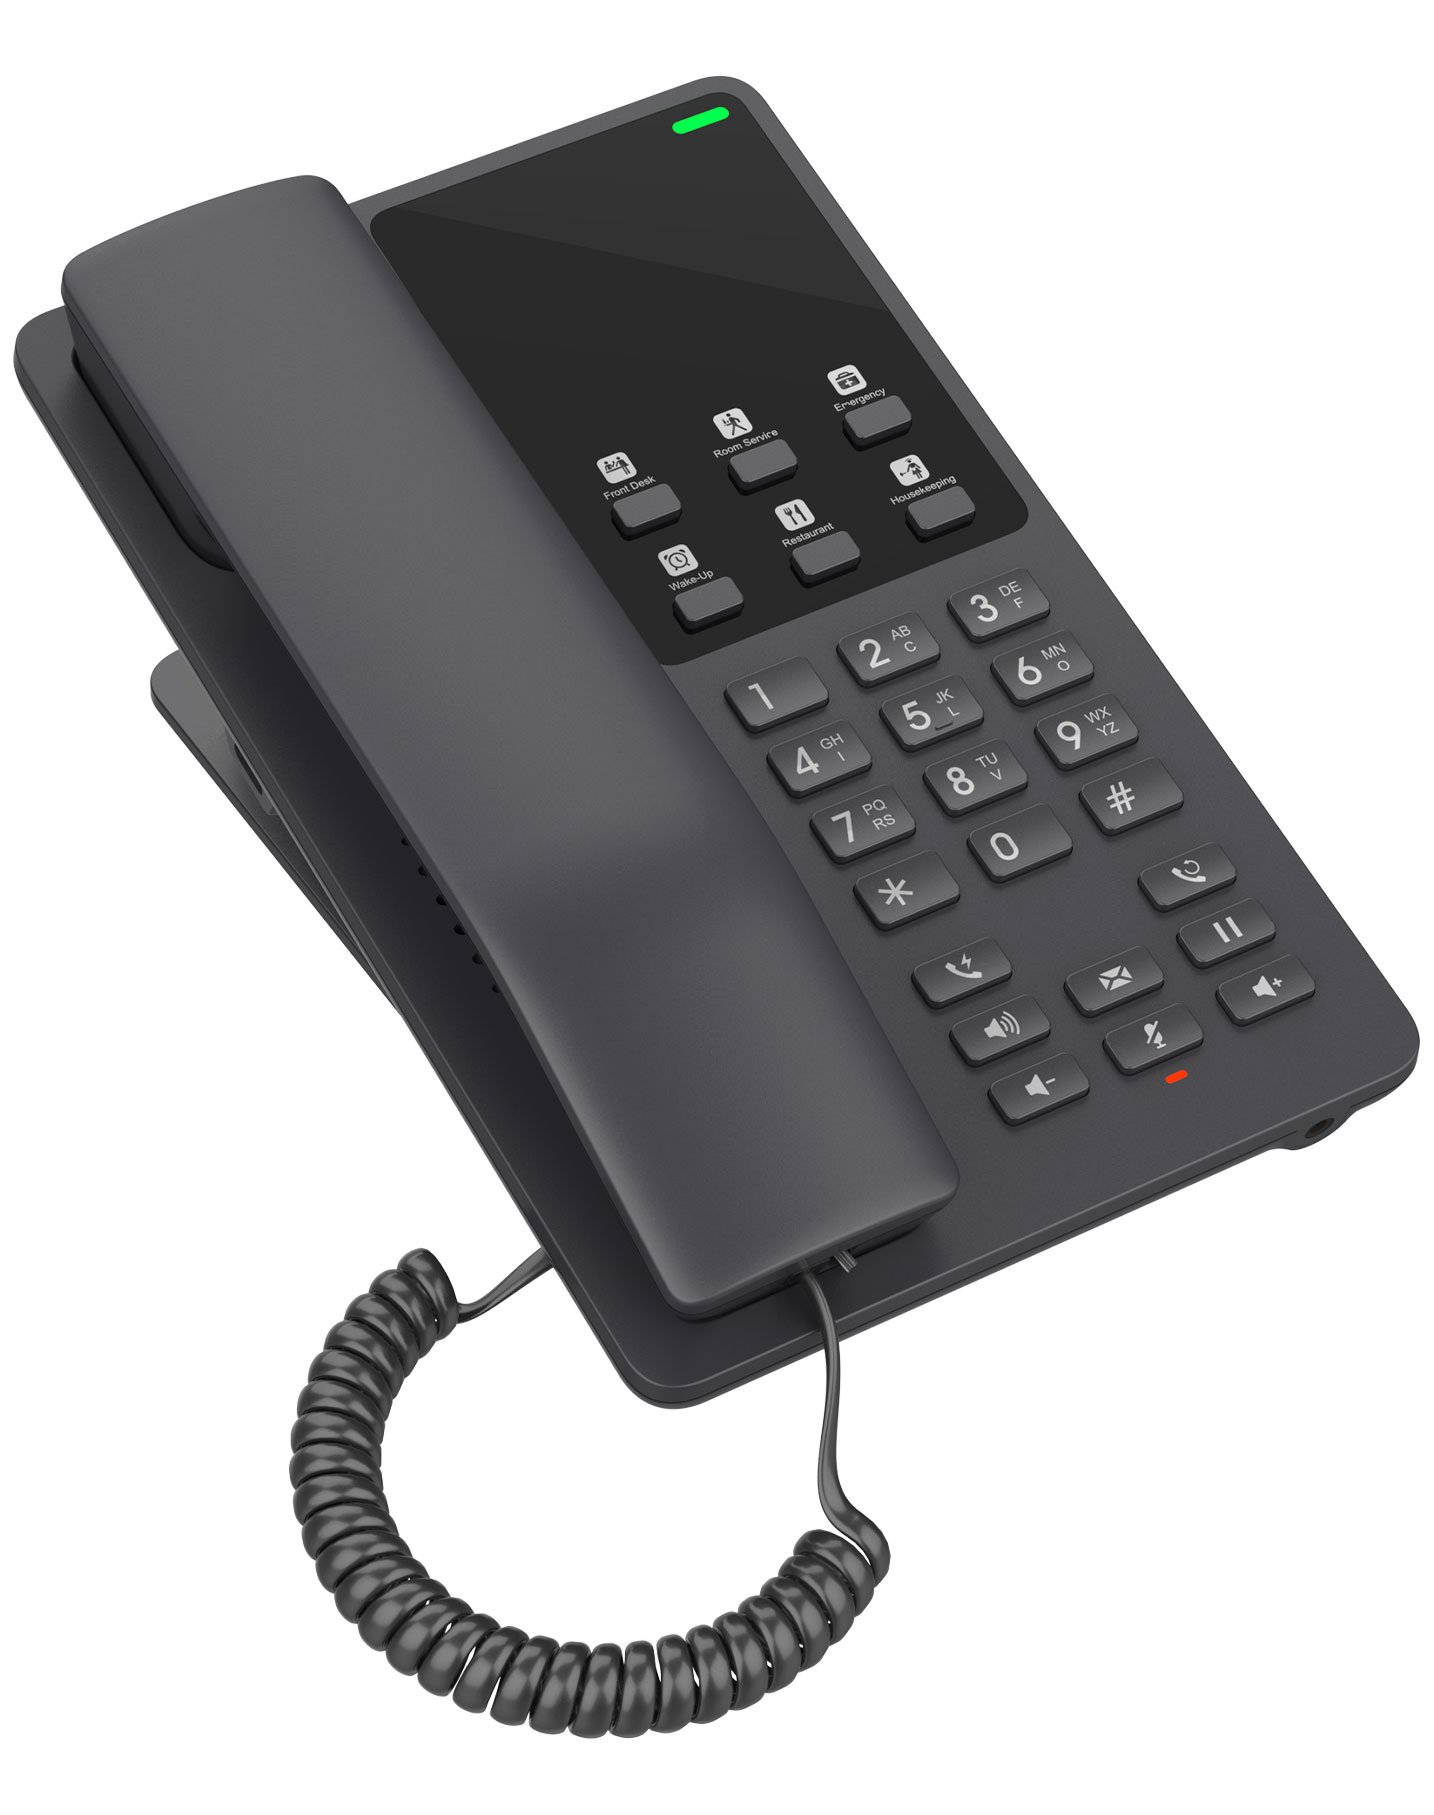 Grandstream GHP621 Compact Hotel Phone left